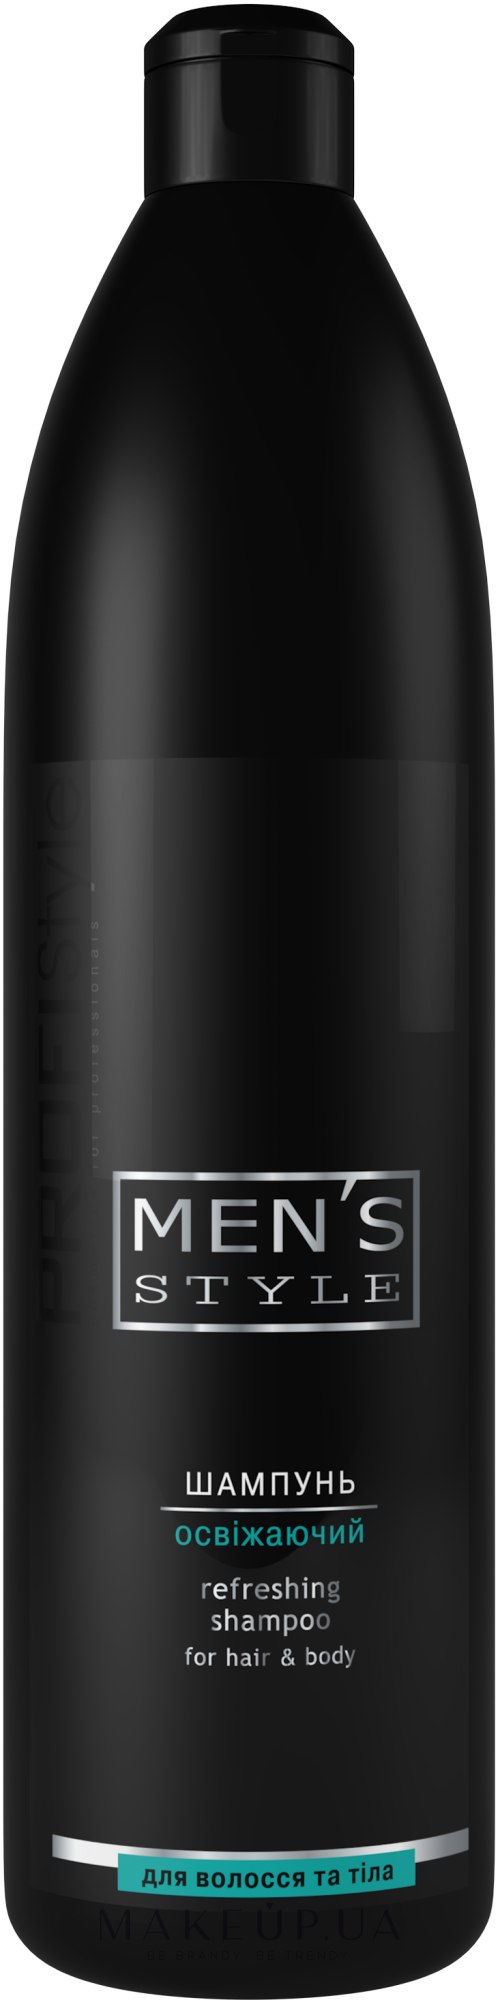 Шампунь освежающий для мужчин - Profi Style Men's Style Refreshing Shampoo  — фото 1000ml